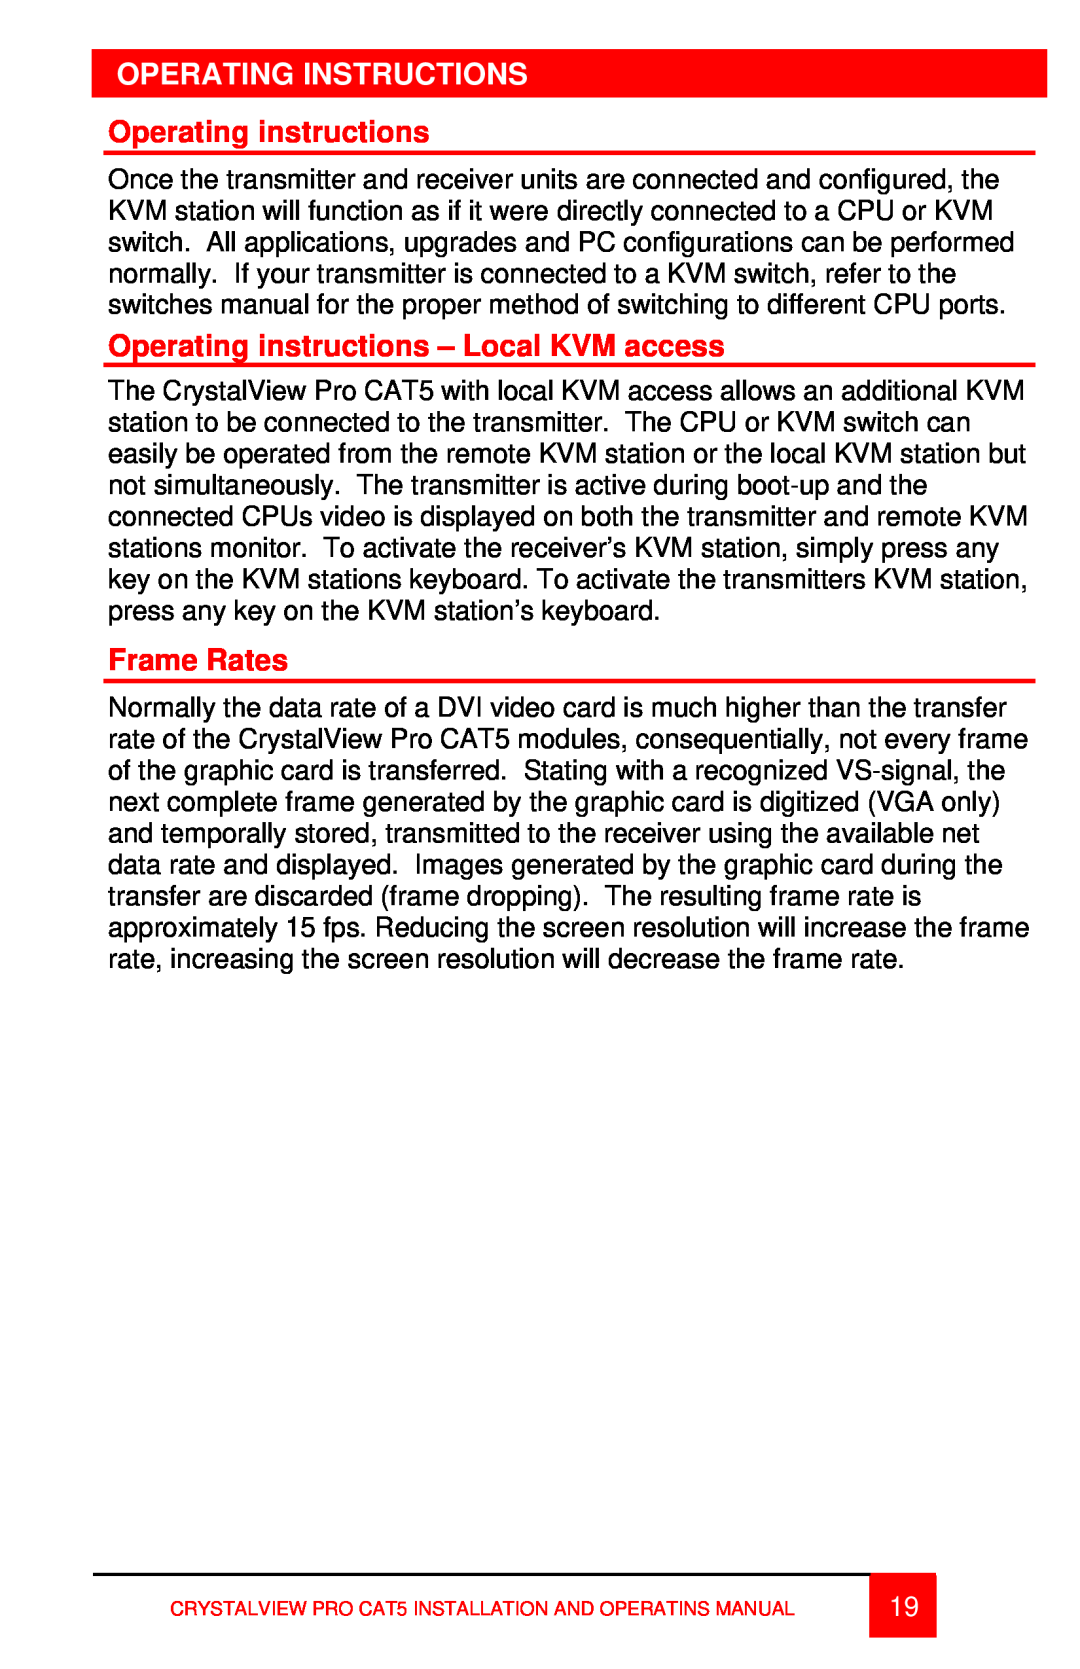 Rose electronic CAT5 manual Operating Instructions, Operating instructions - Local KVM access, Frame Rates 